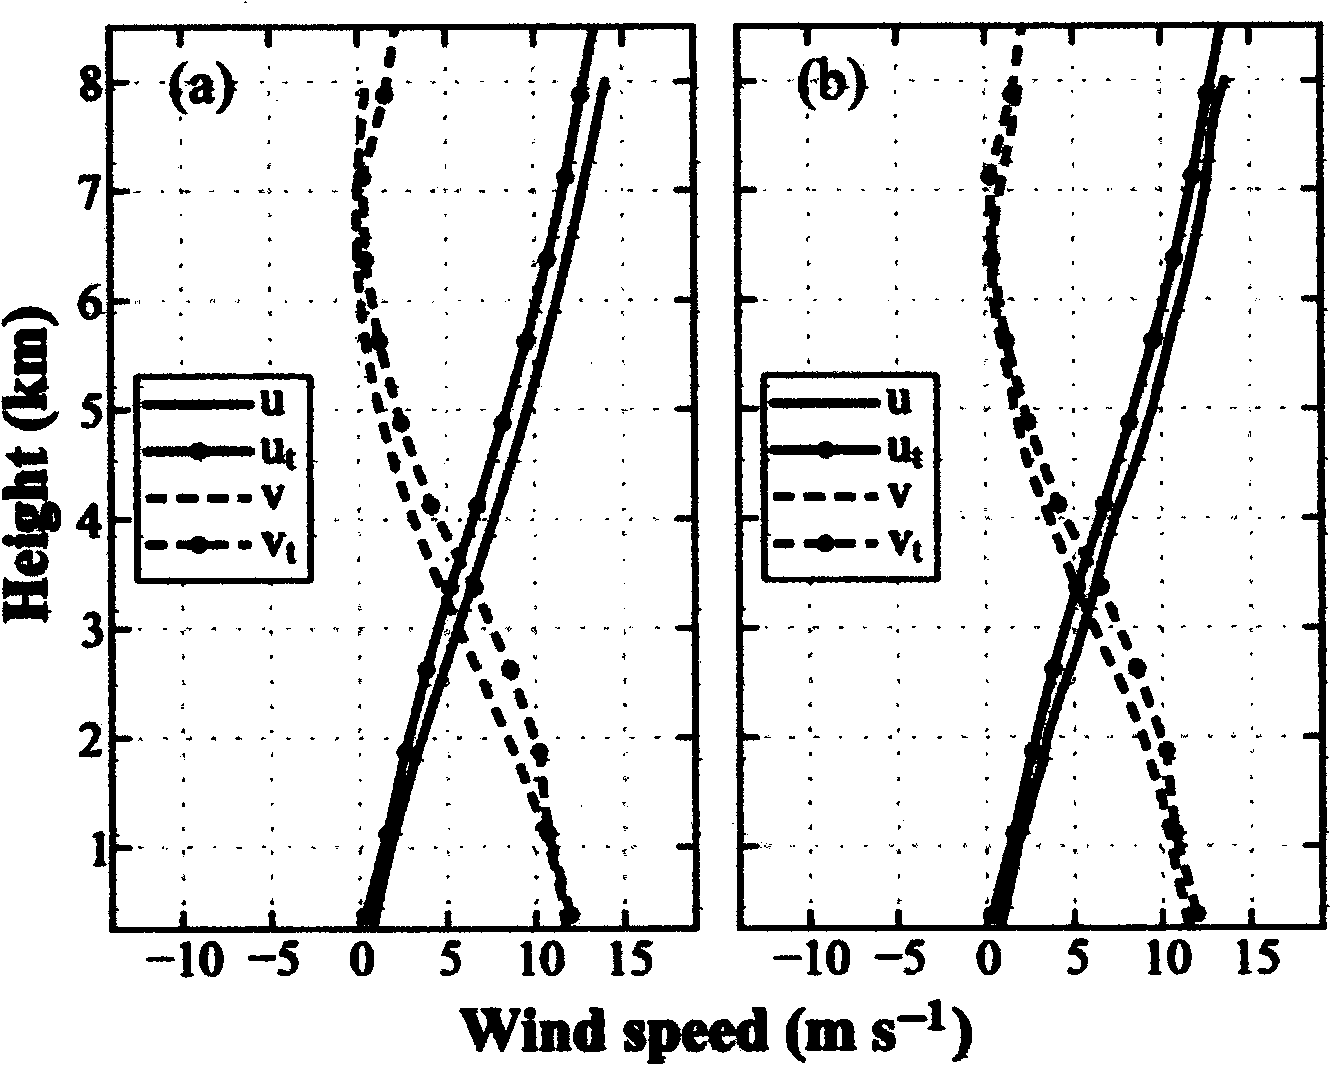 Vertical wind profile nonlinear inversion method based on Doppler weather radar